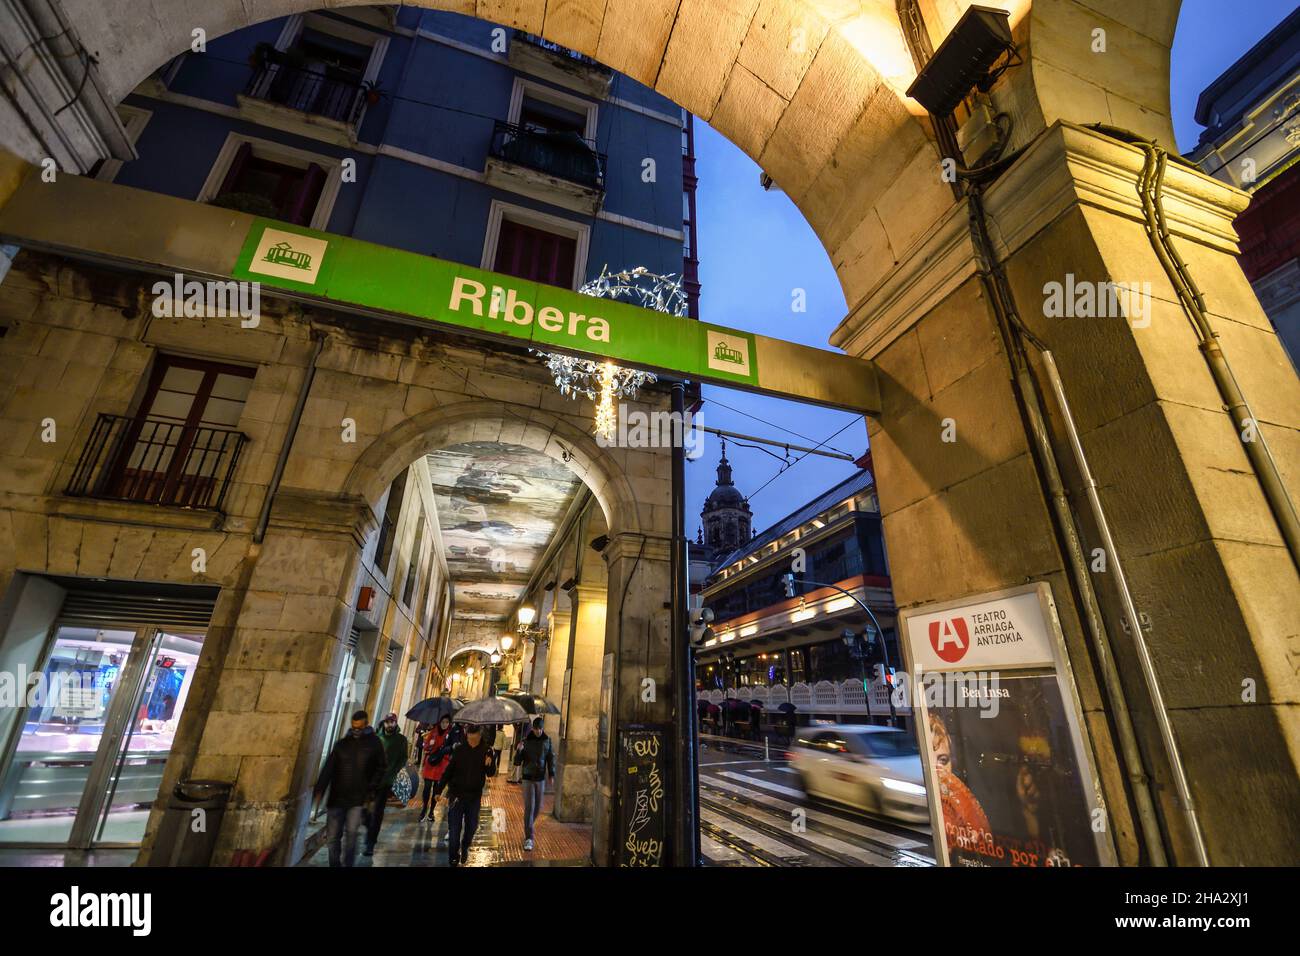 Portals of the old town of Bilbao next to the Mercado de la Ribera at dusk raining Stock Photo